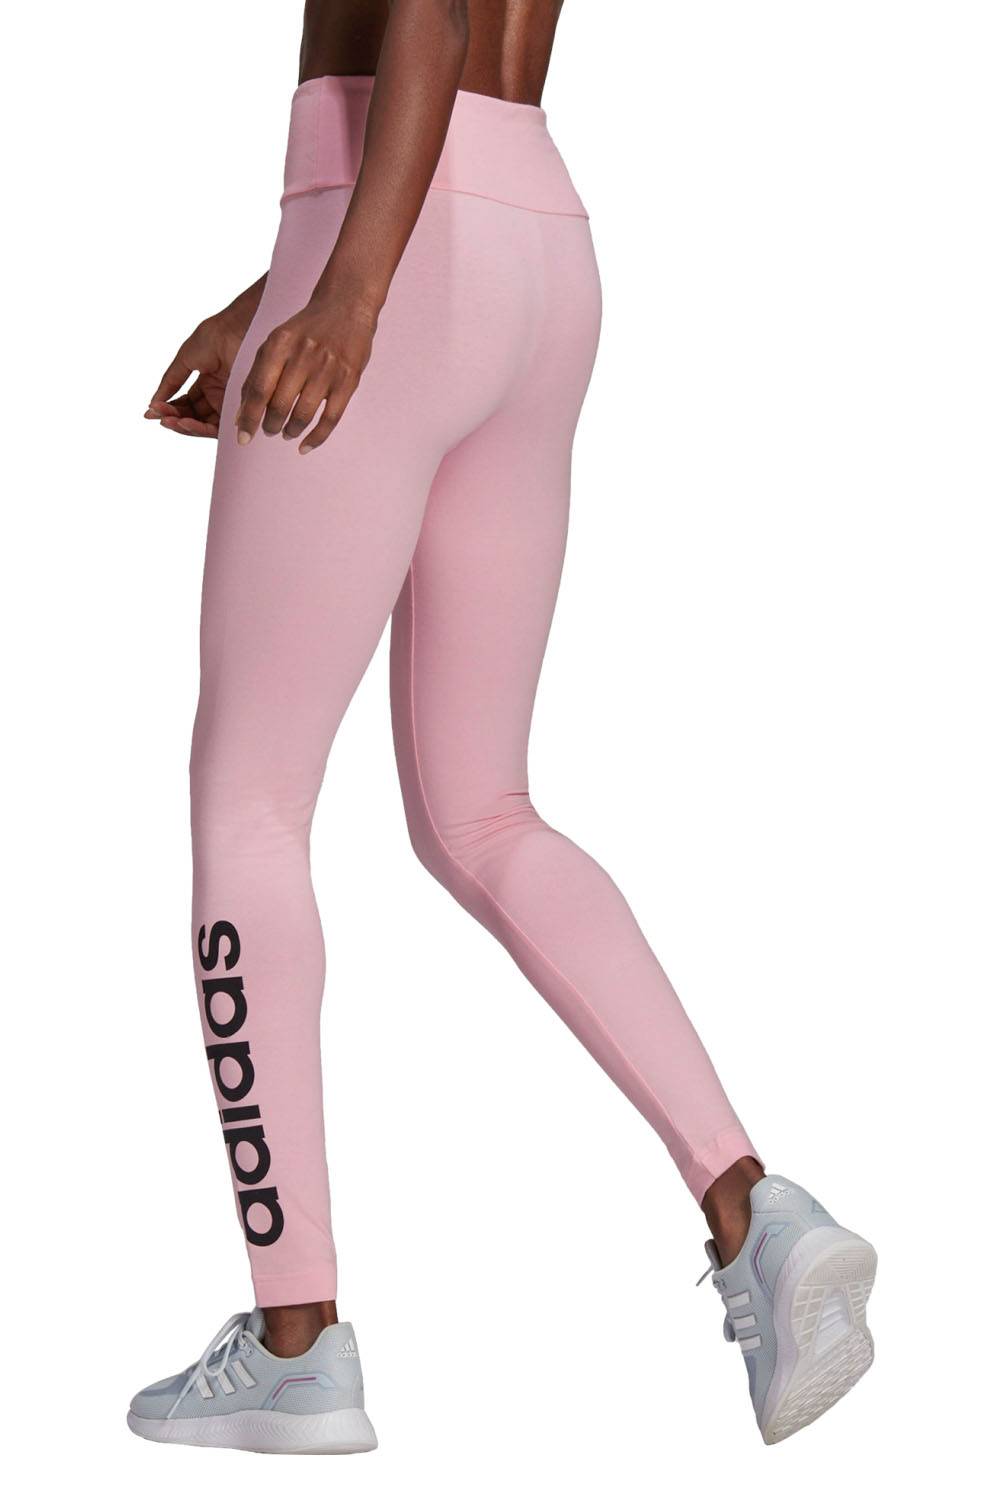 ADIDAS - Adidas Calzas Larga Tiro Medio Mujer